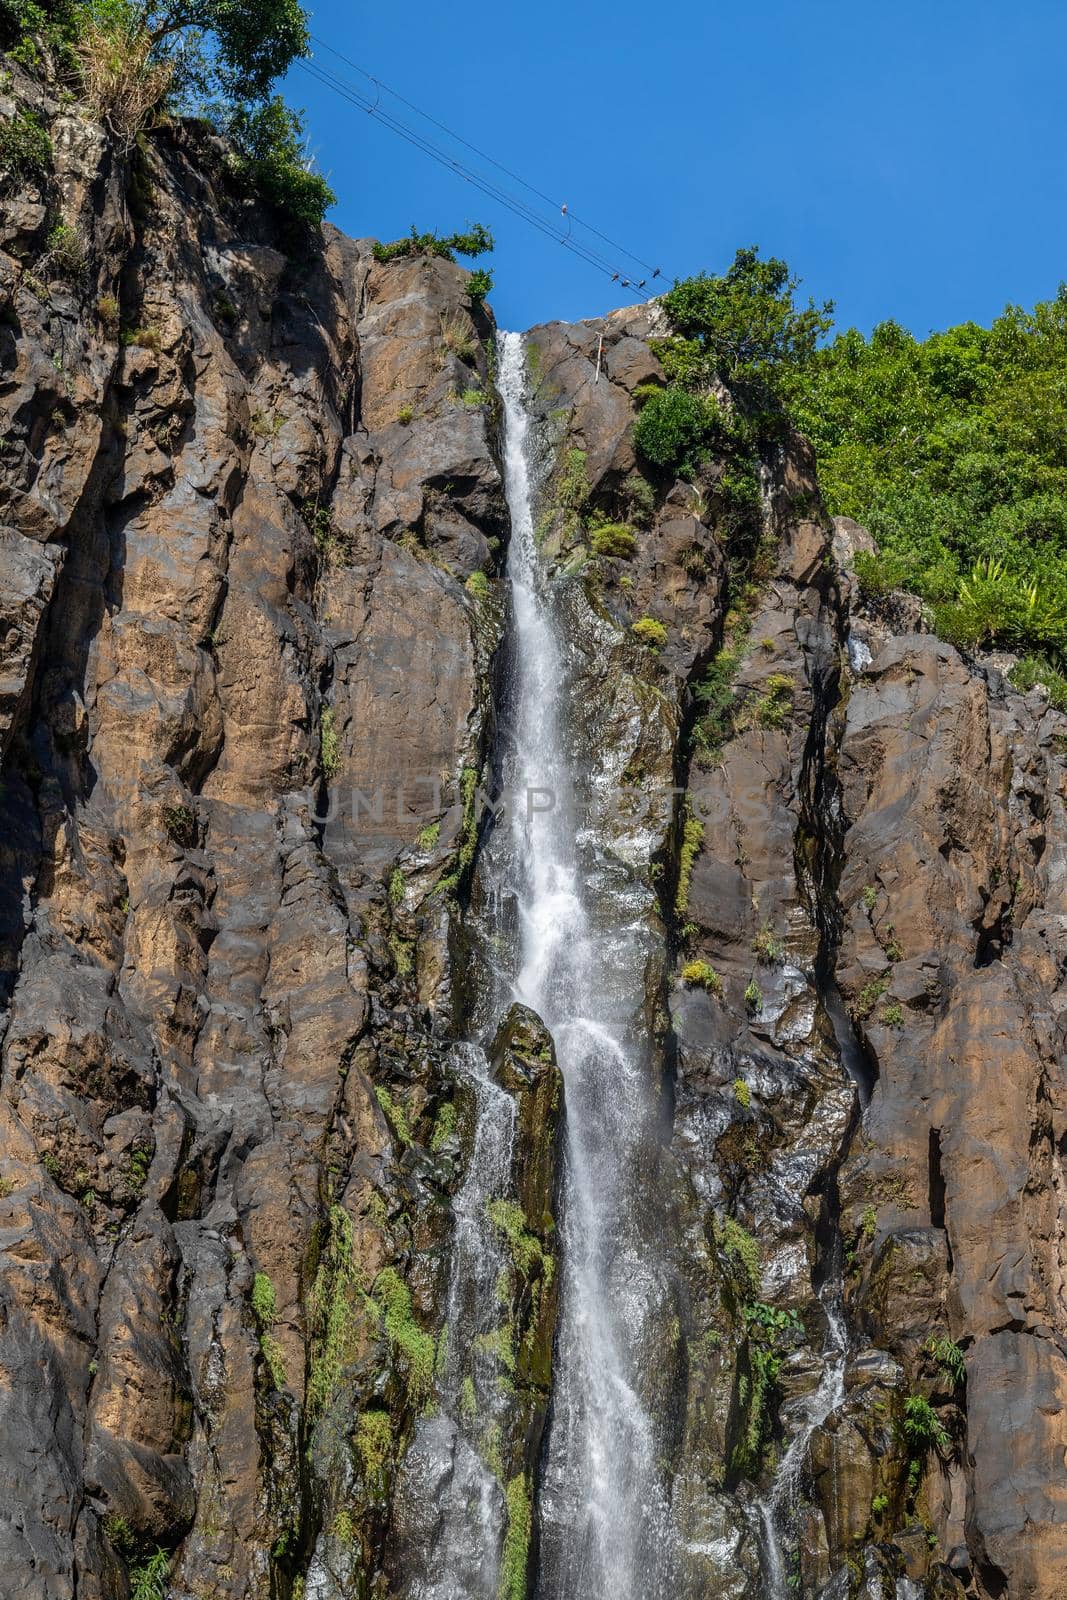 Waterfall Cascade Niagara at Reunion island by reinerc